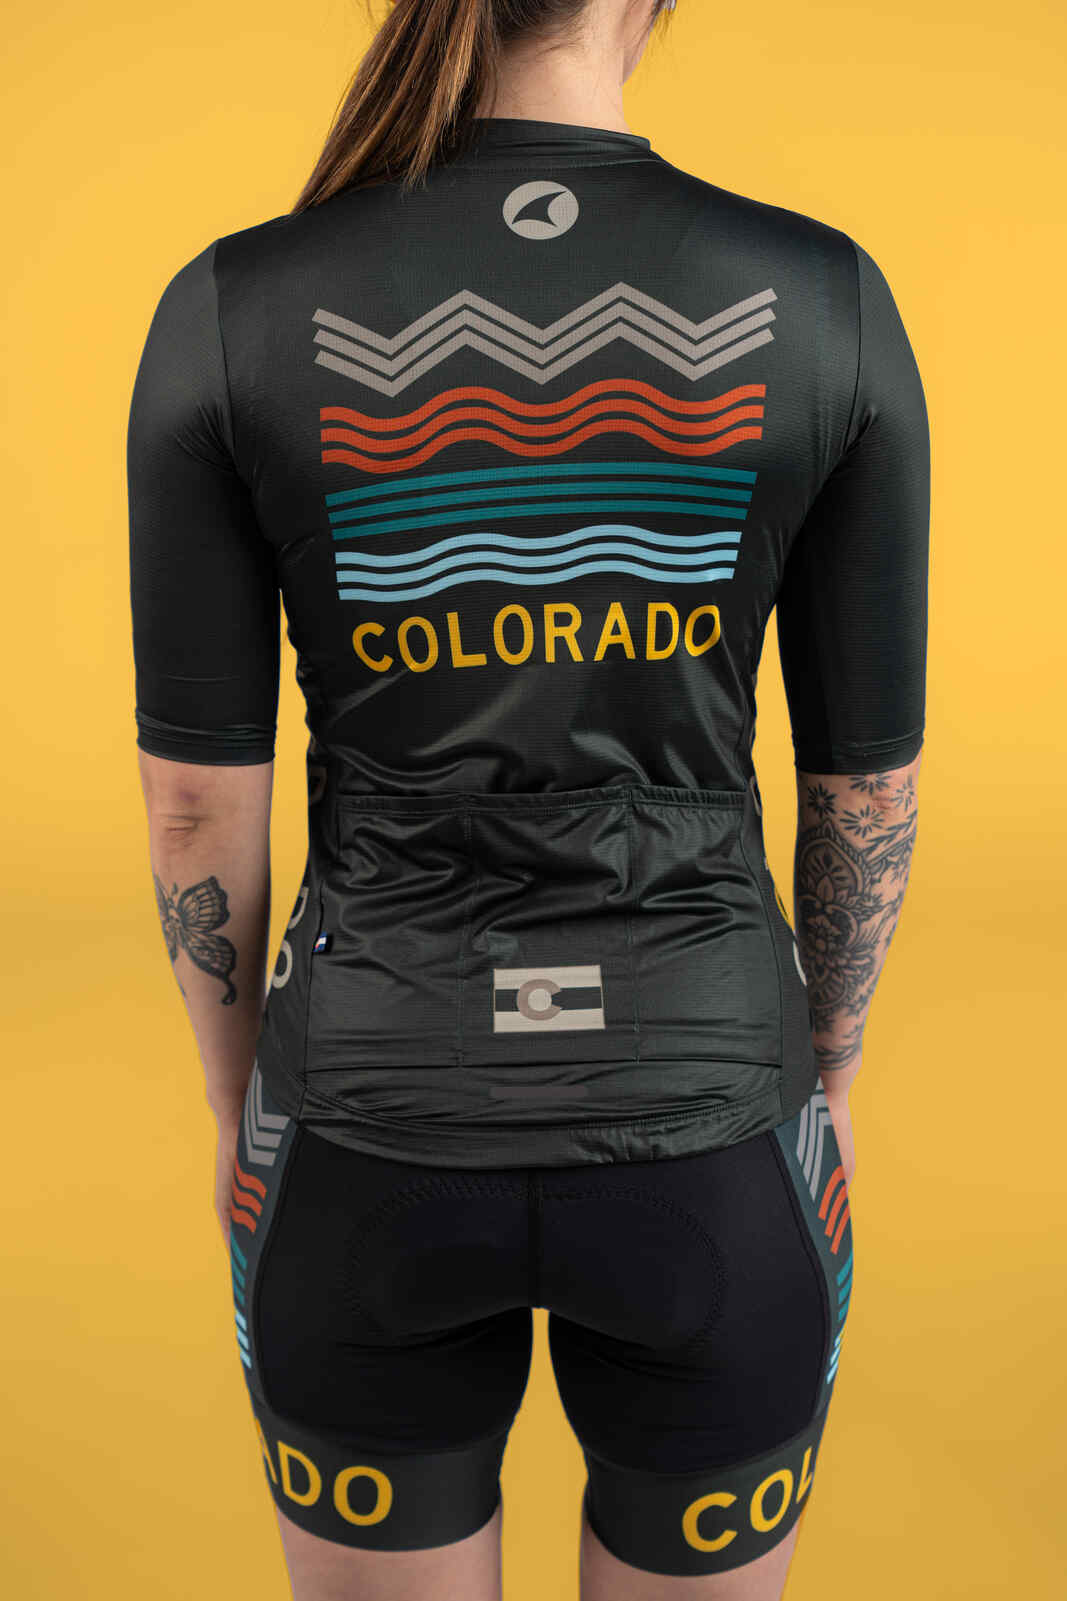 Women's Navy Blue Colorado Cycling Jersey - Back Pockets